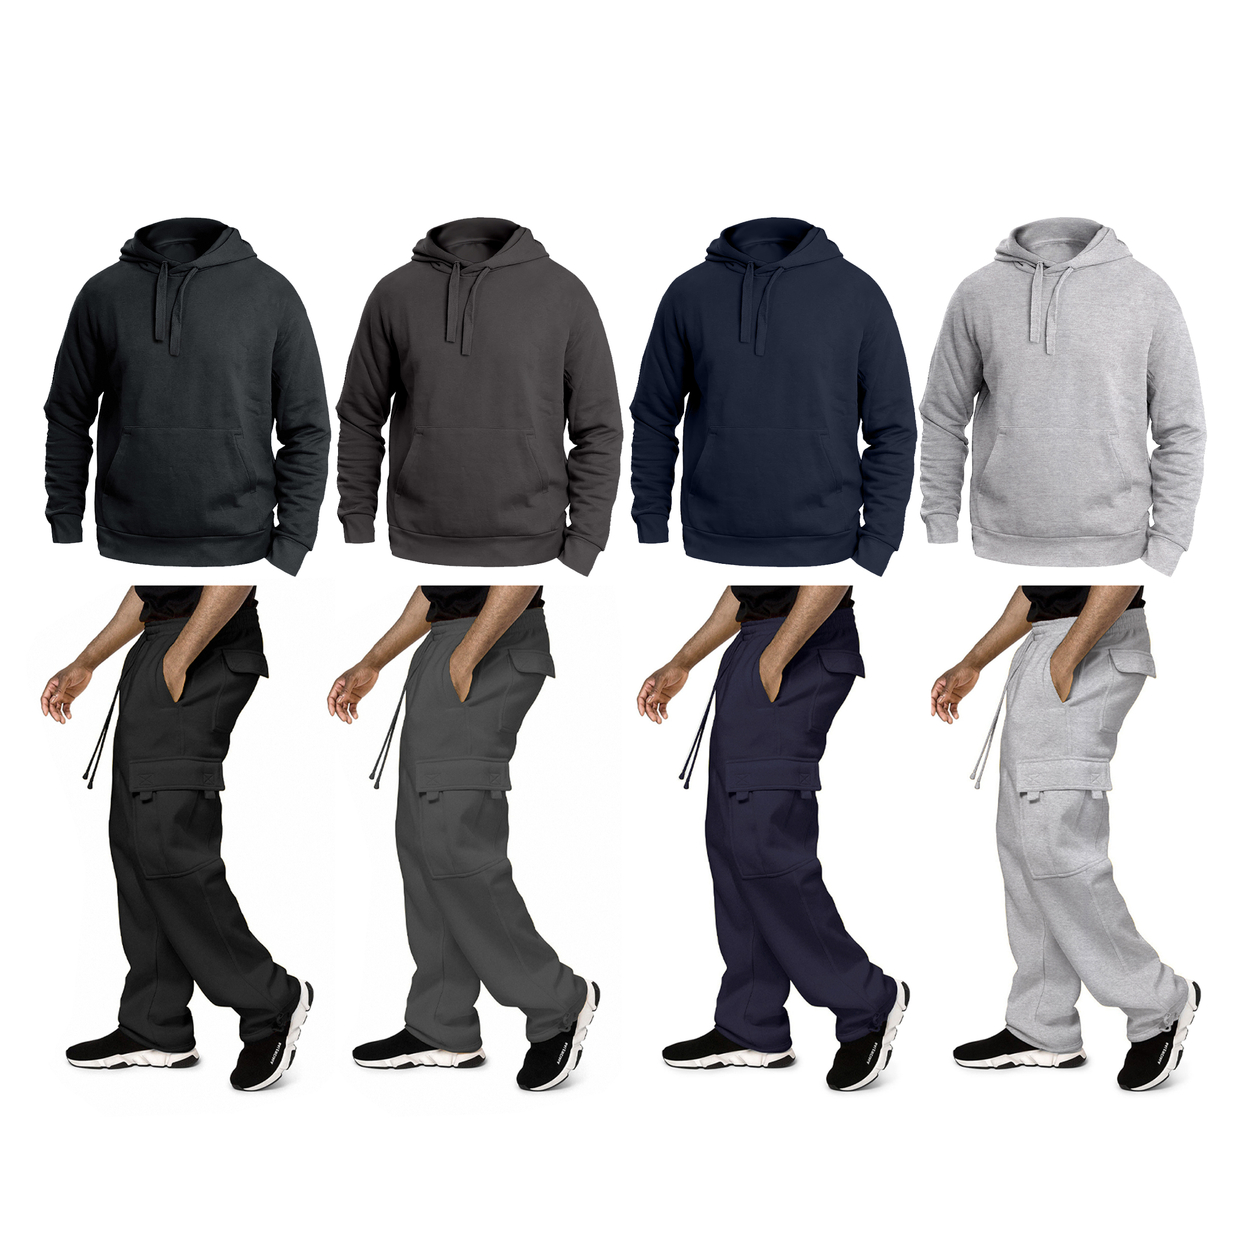 Multi-Pack: Big & Tall Men's Winter Warm Cozy Athletic Fleece Lined Multi-Pocket Cargo Sweatsuit - Navy, 1-pack, Large